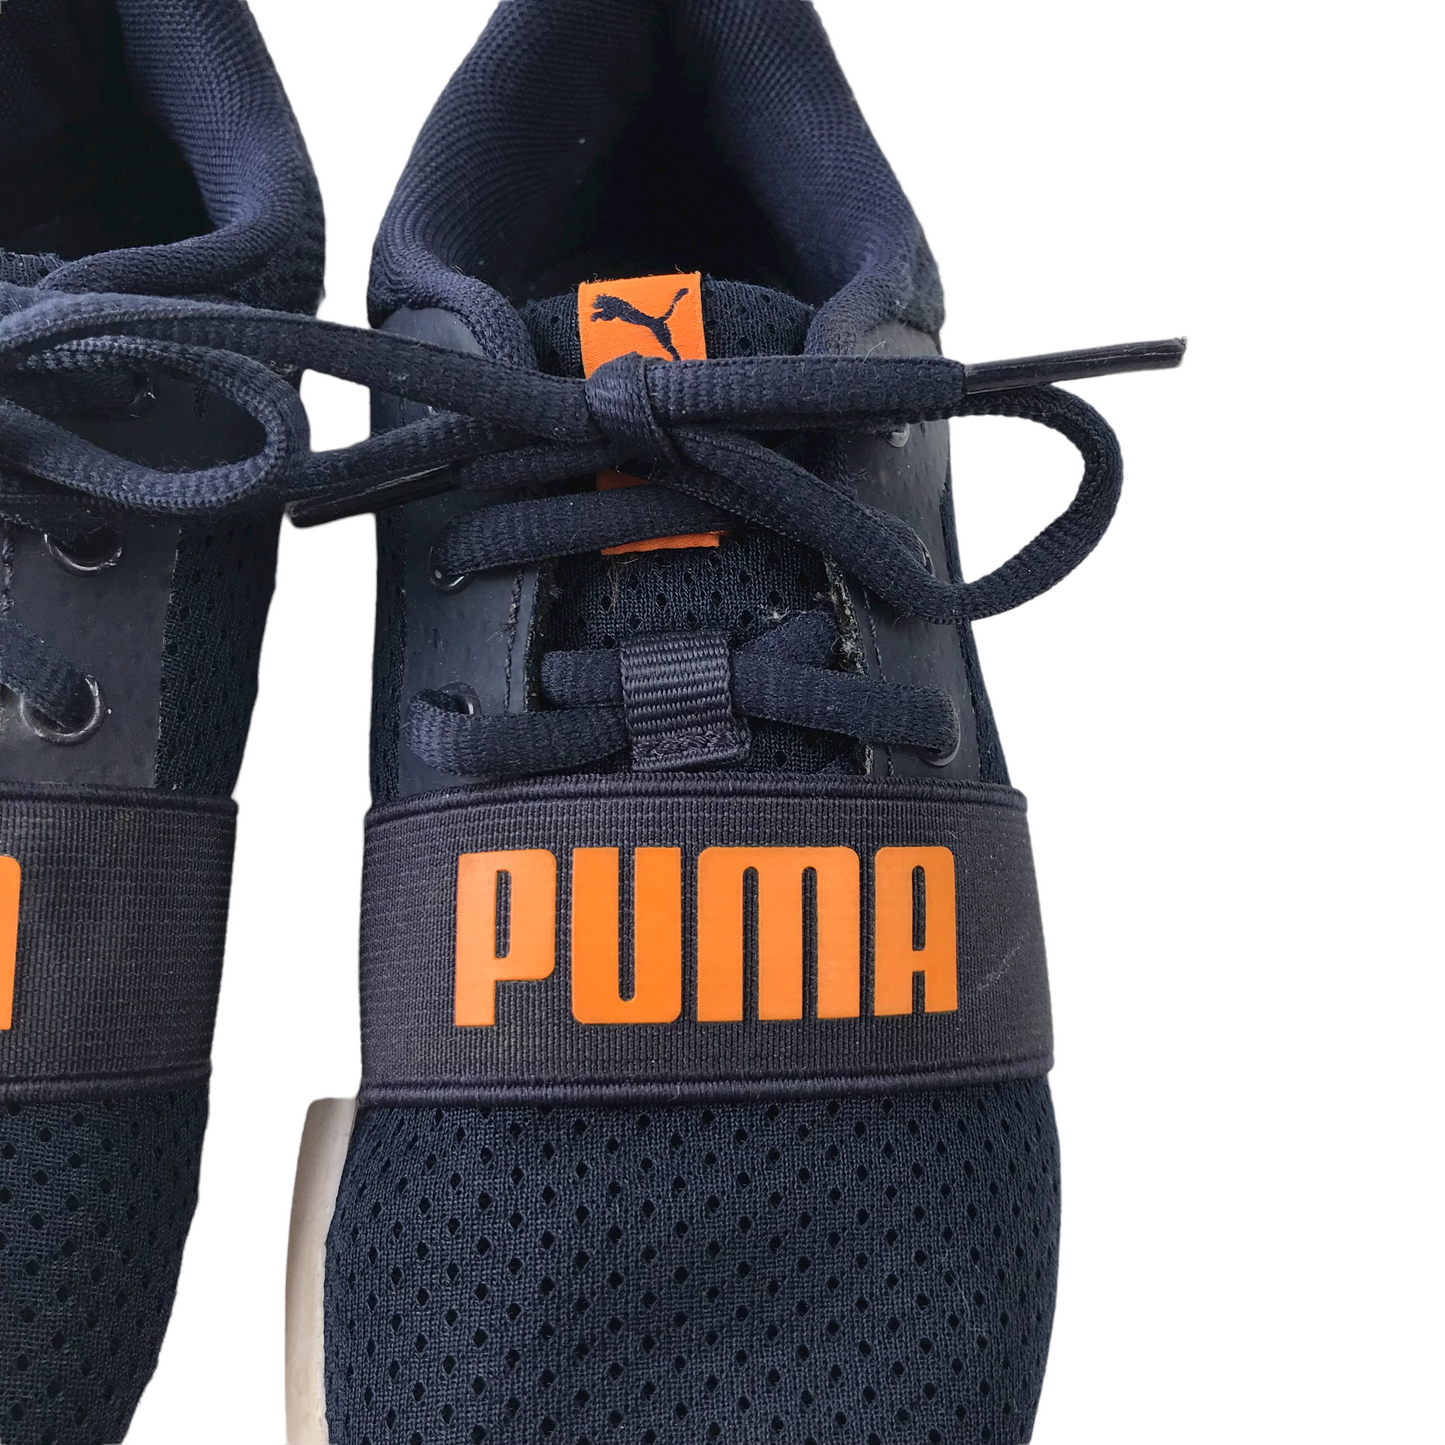 Puma Navy Blue Soft Foam Trainers Size UK 13 junior